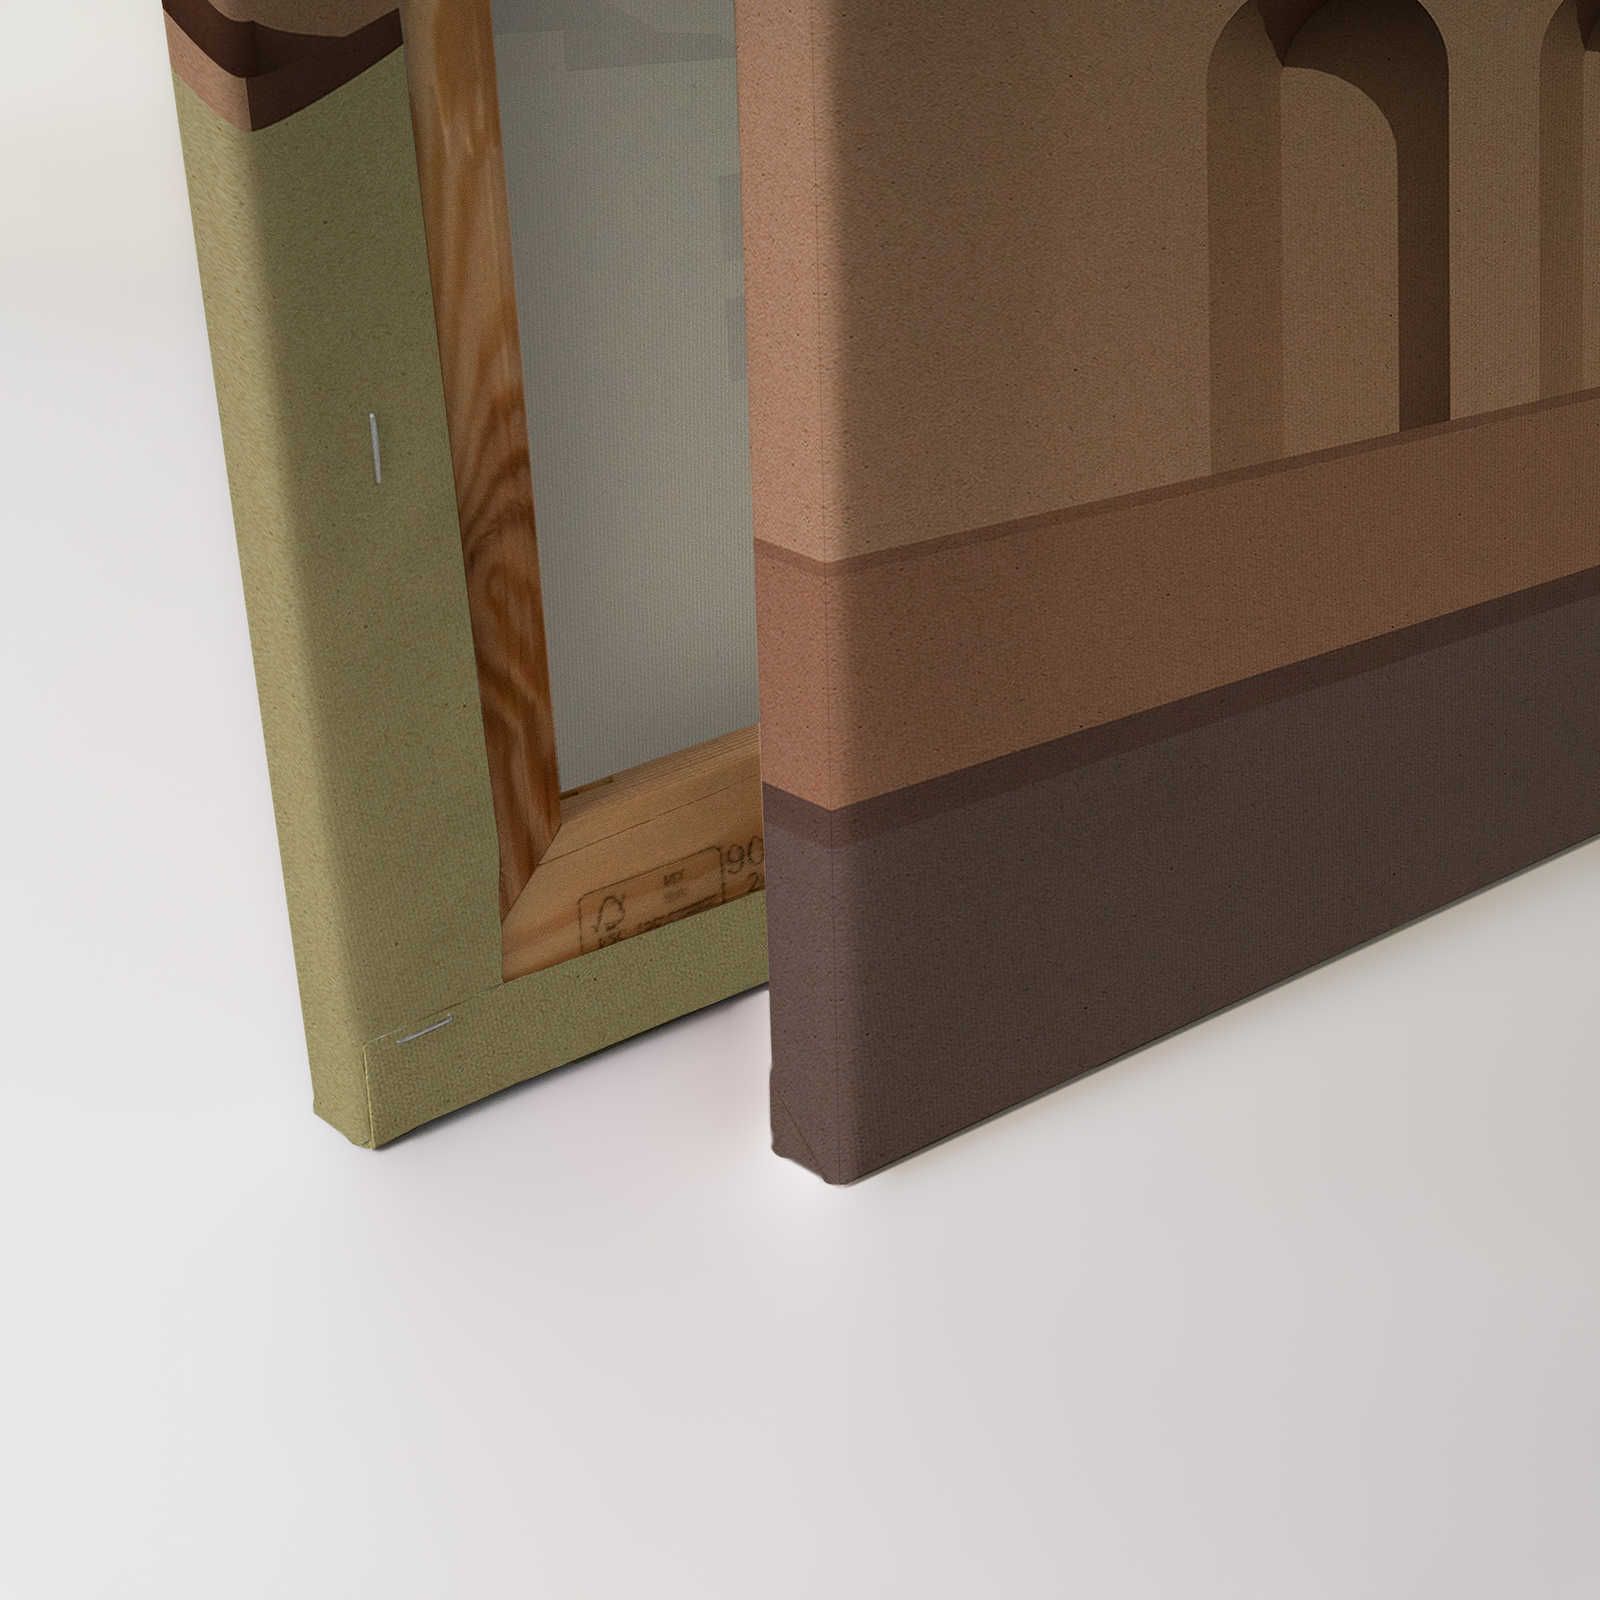             Tanger 2 - Toile Architecture Dessert Style abstrait - 0,90 m x 0,60 m
        